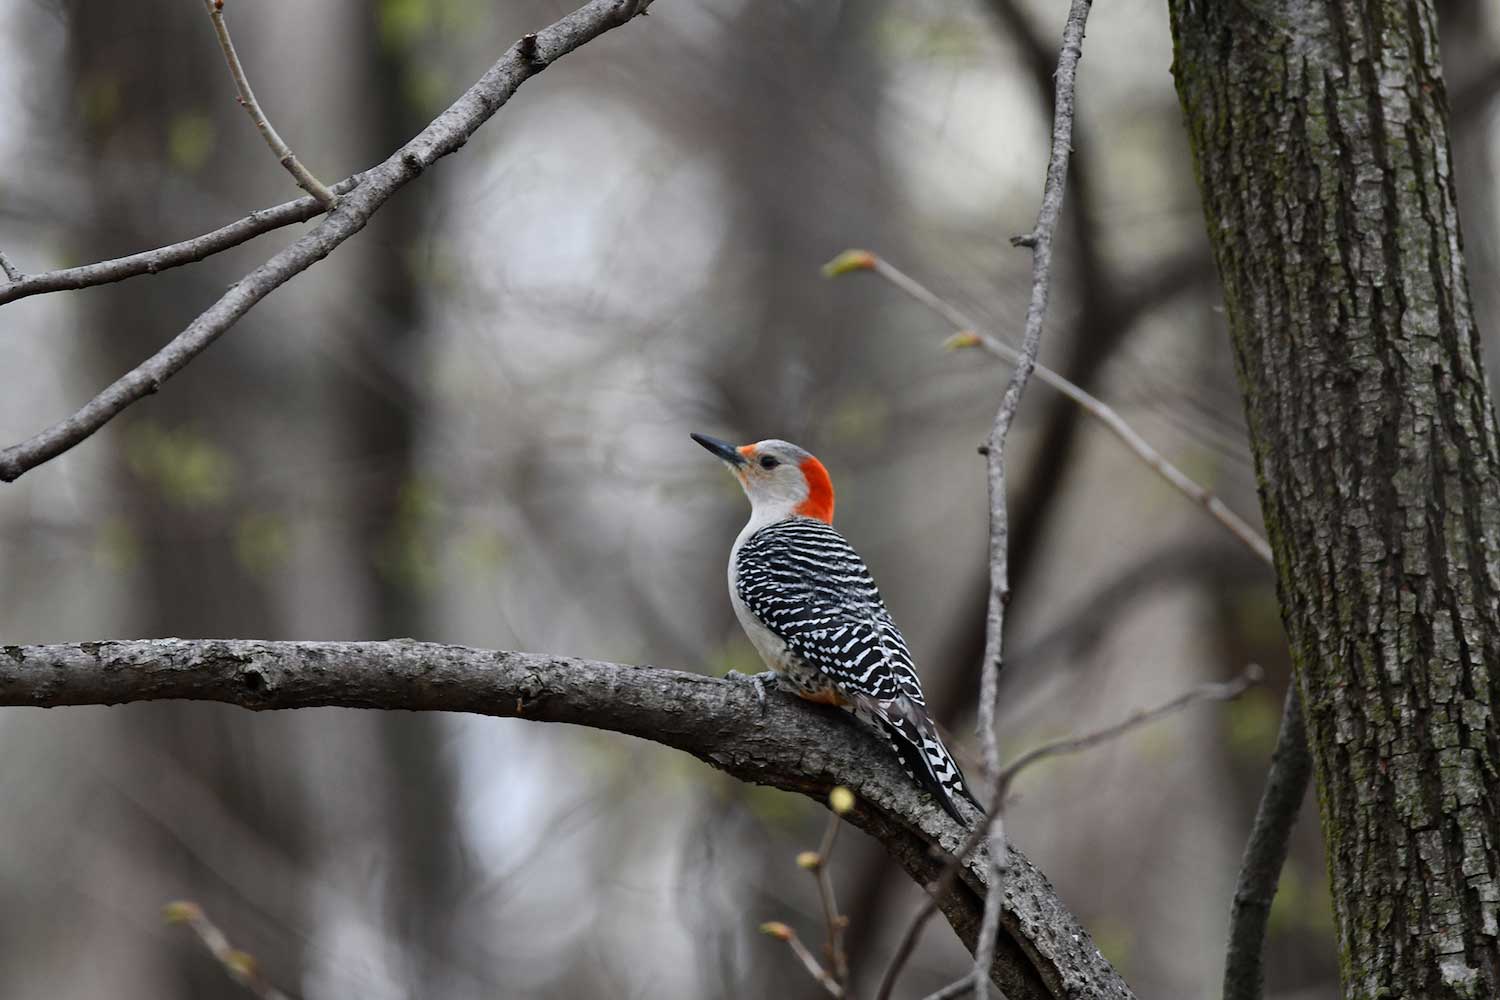 A red-bellied woodpecker on a tree branch.